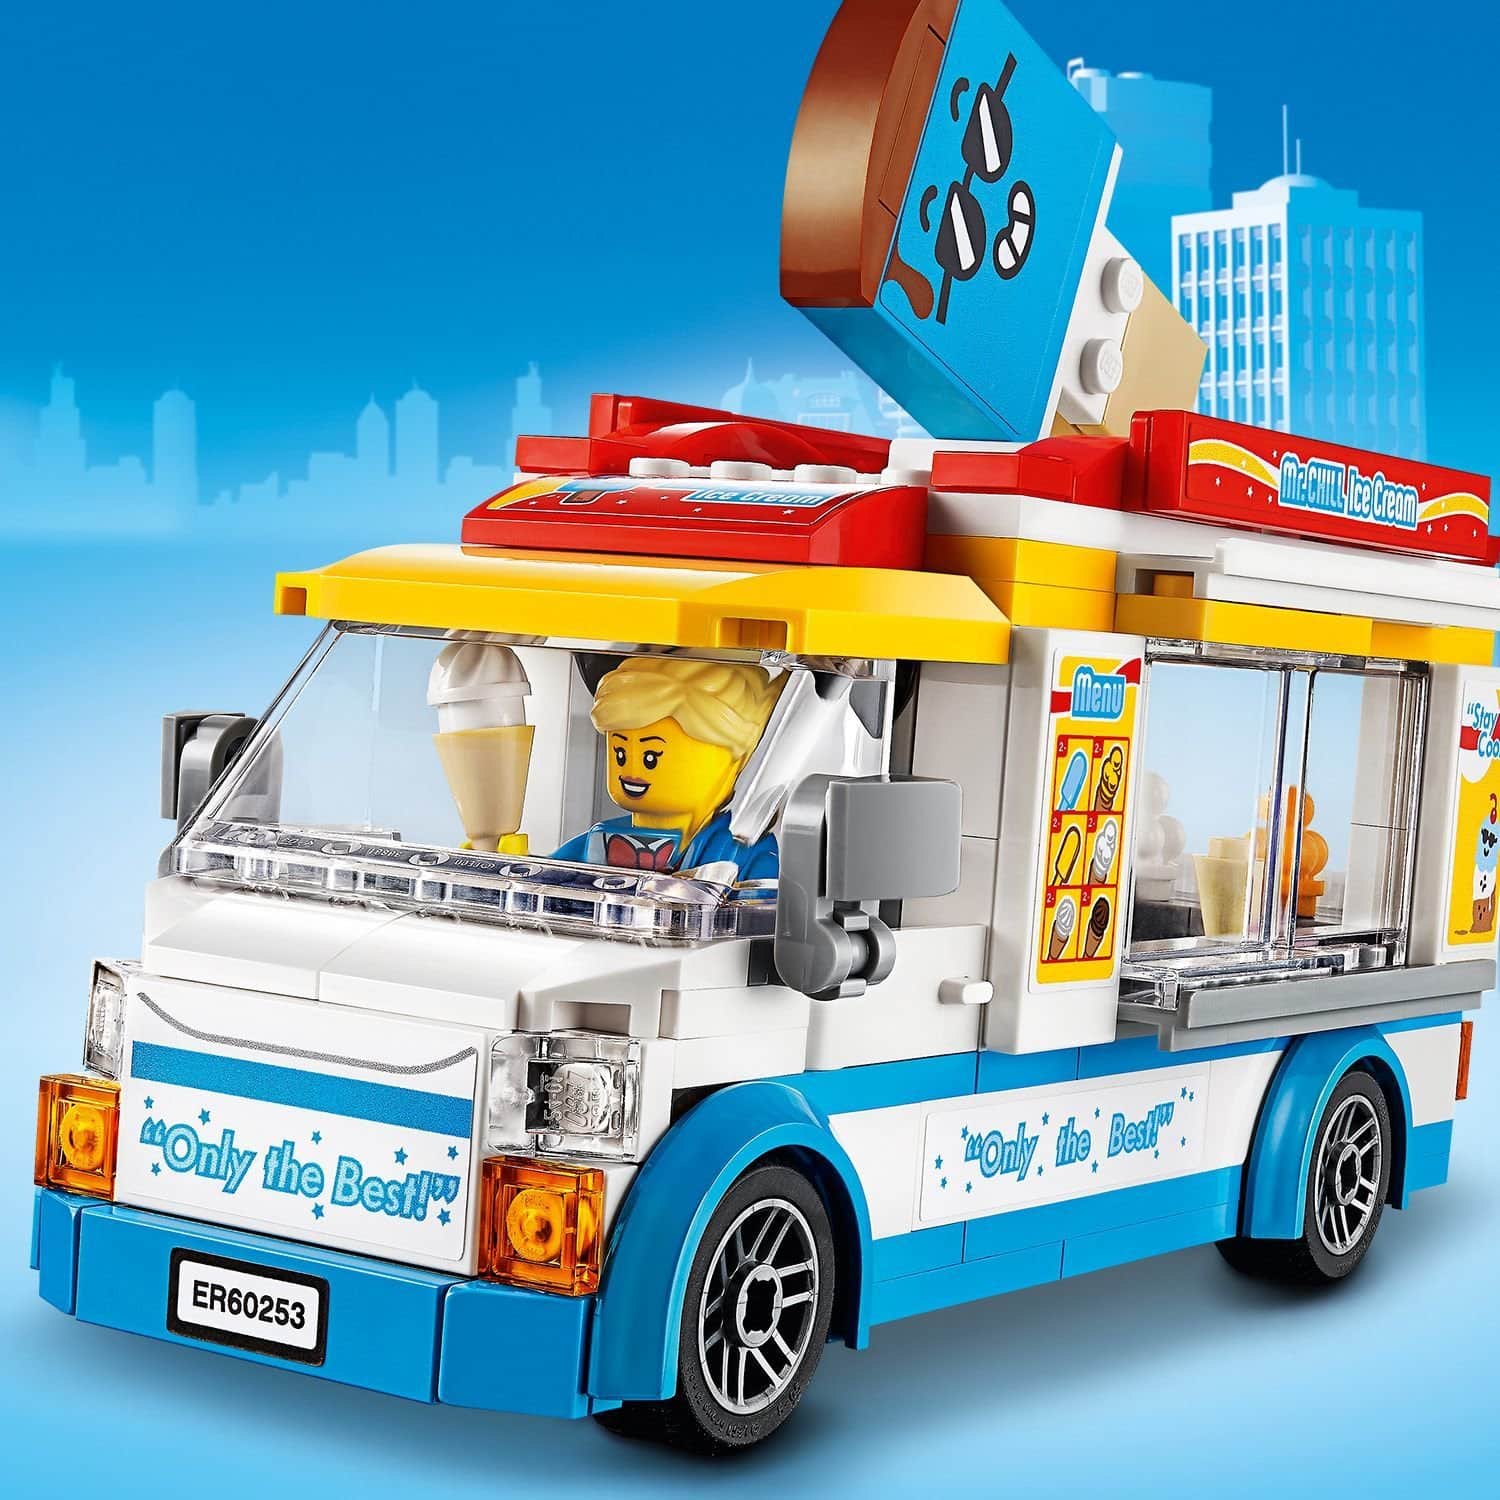 Конструктор Lego City 60253 Грузовик мороженщика